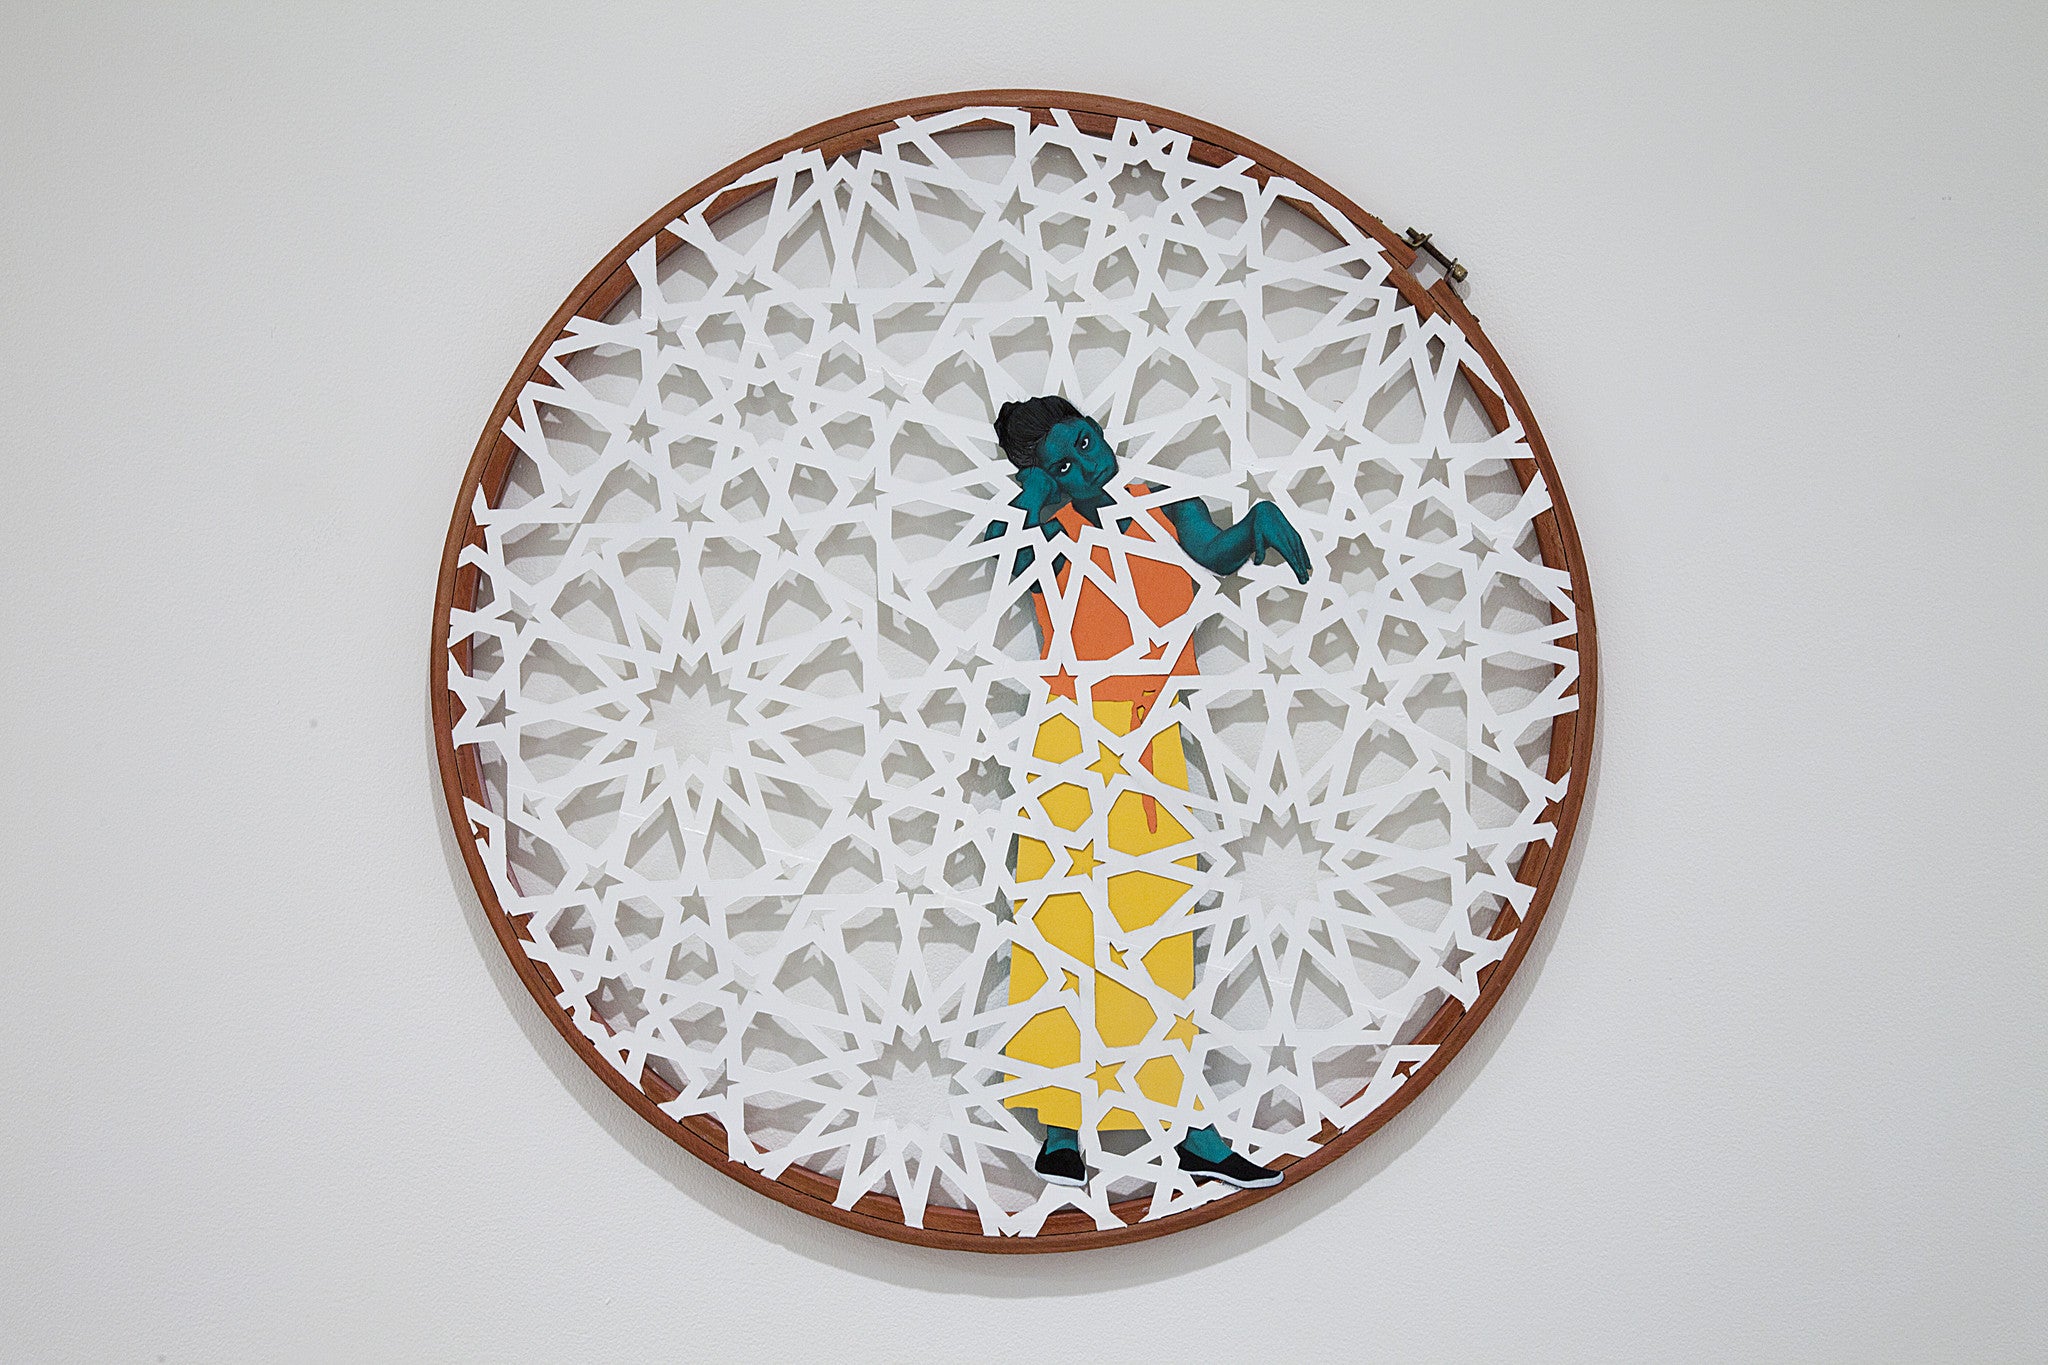 Sophia Khwaja, "Behind the Pattern"